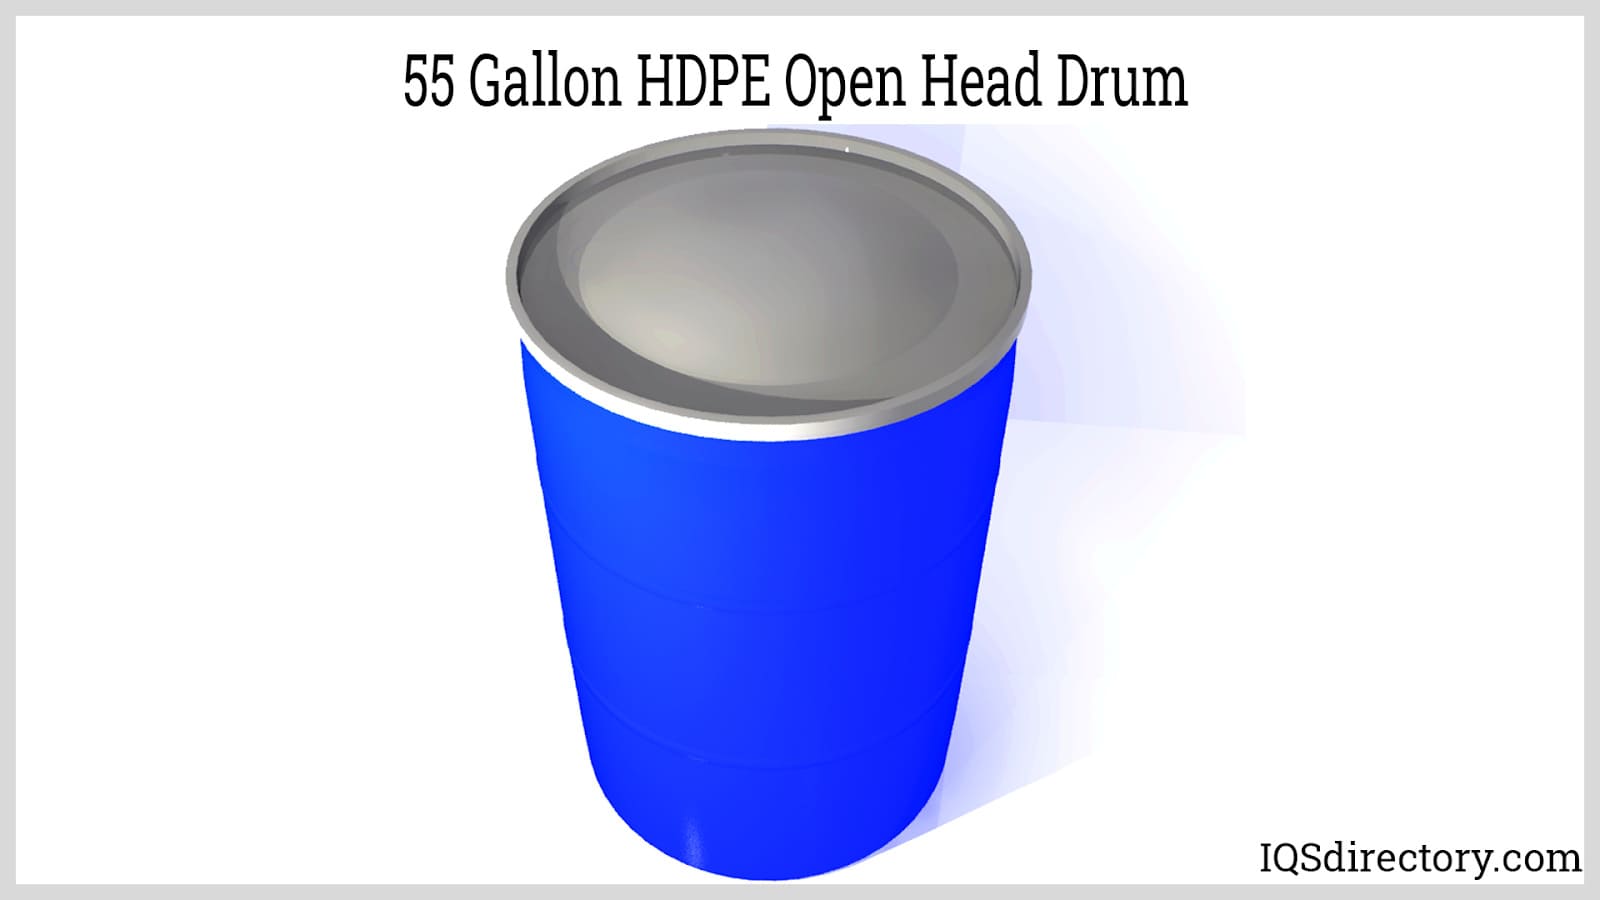 55 Gallon HDPE Open Head Drum